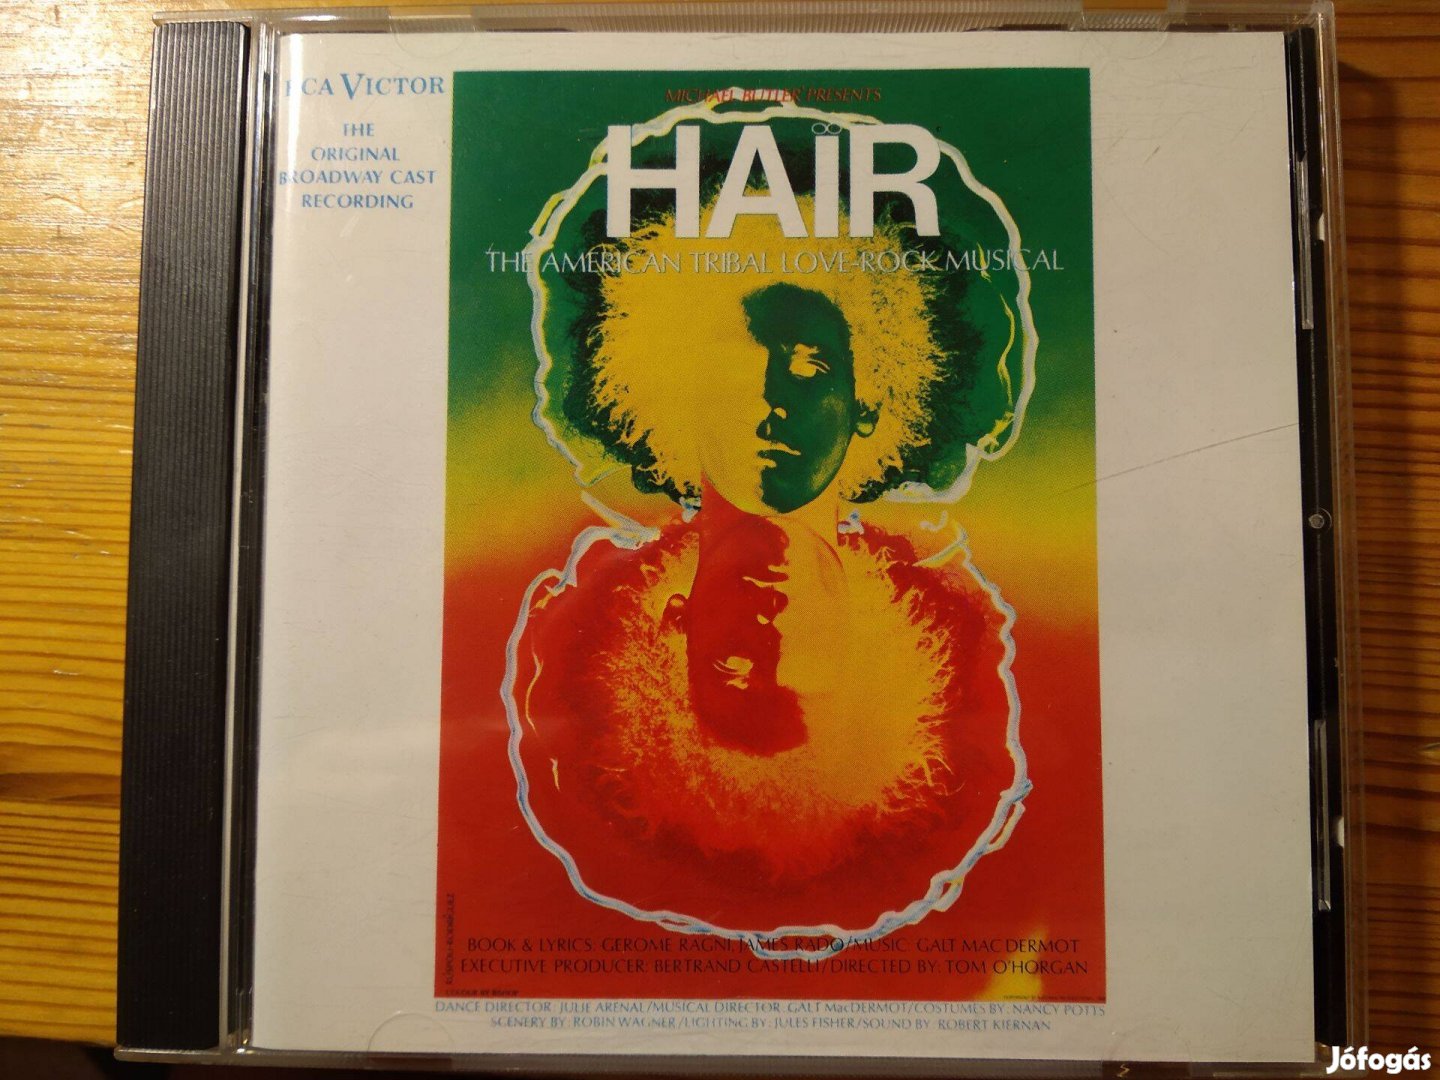 Hair Original Broadway cast (1968) CD